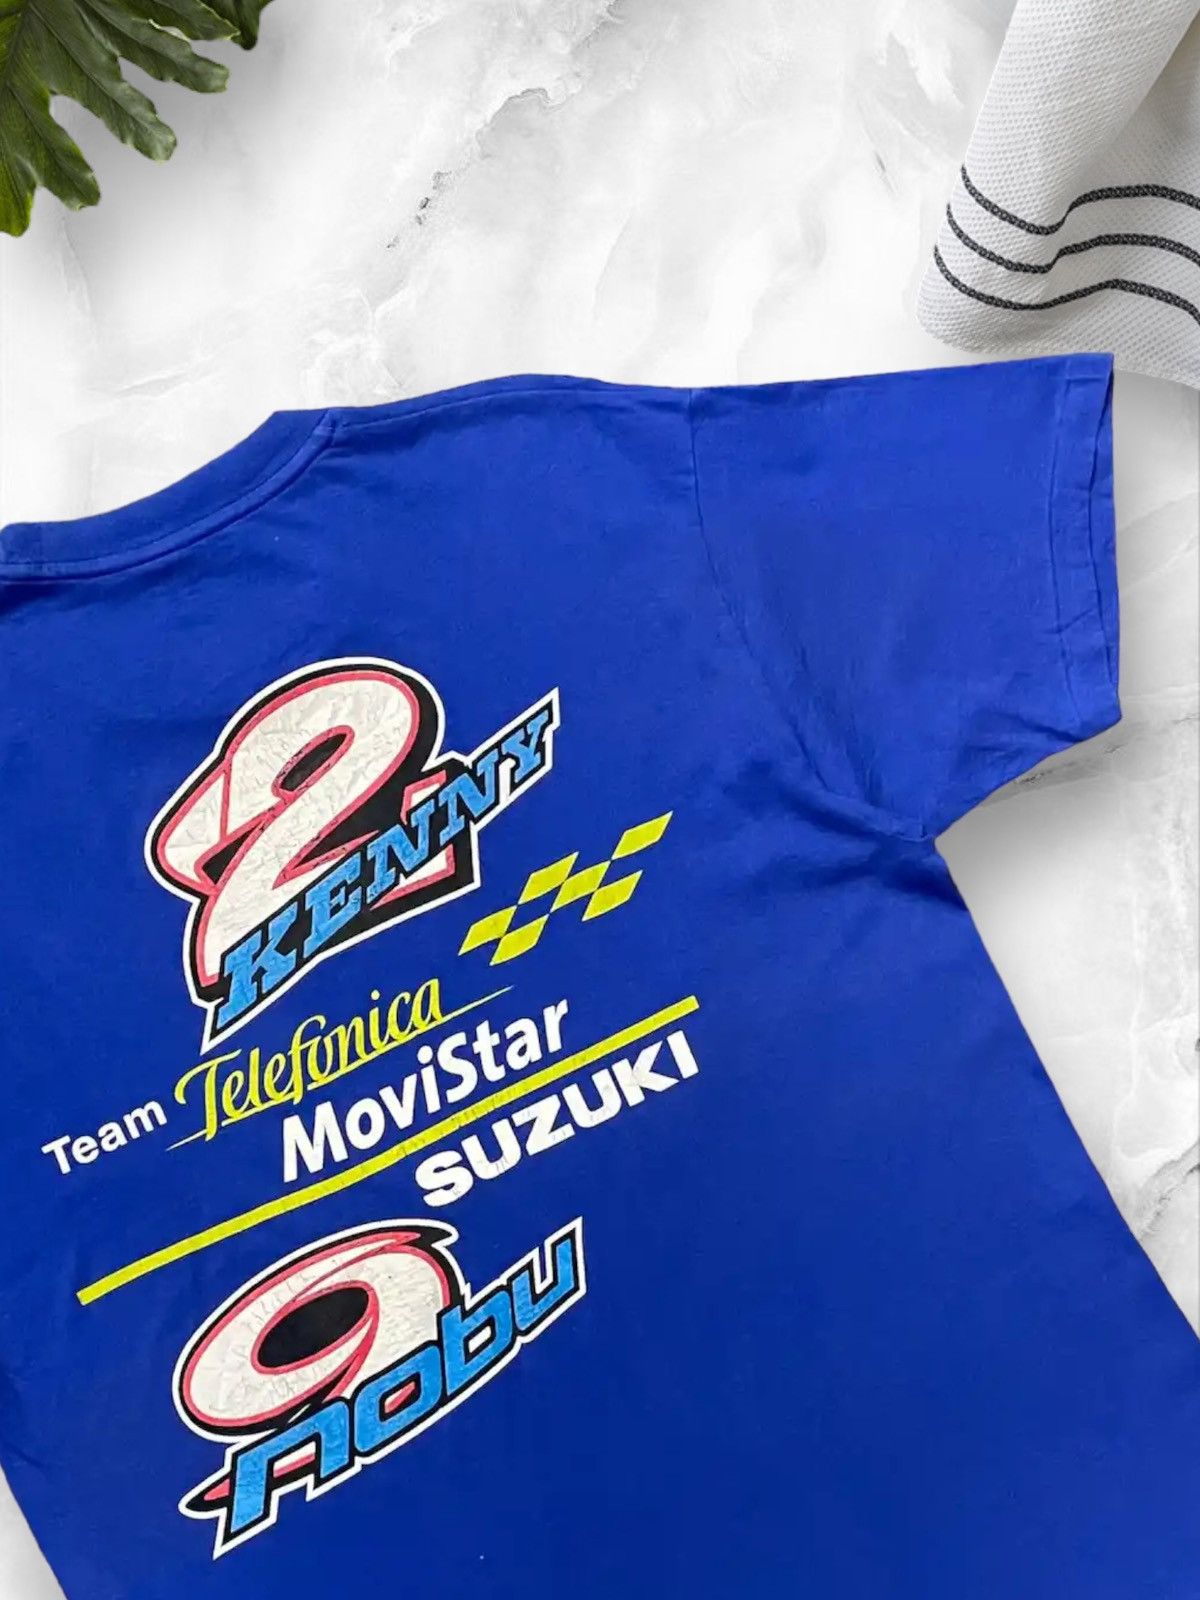 Vintage Vtg 90s Kenny Roberts Team Telefonica Movistar Suzuki Tshirt Size US M / EU 48-50 / 2 - 4 Thumbnail